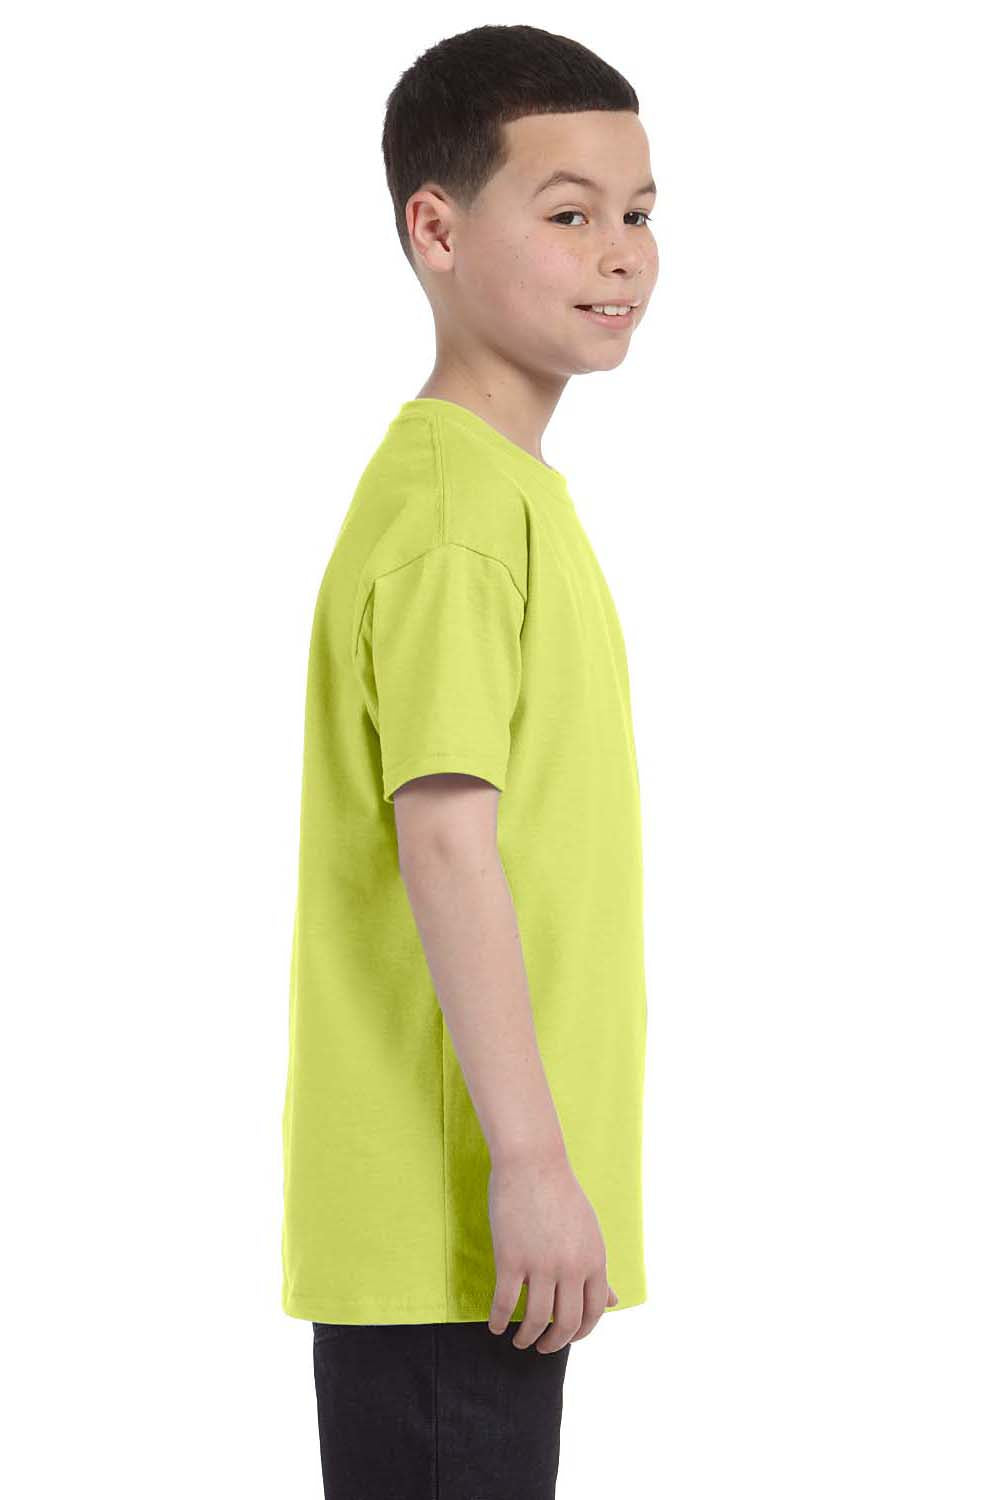 Jerzees 29B Youth Dri-Power Moisture Wicking Short Sleeve Crewneck T-Shirt Safety Green Side